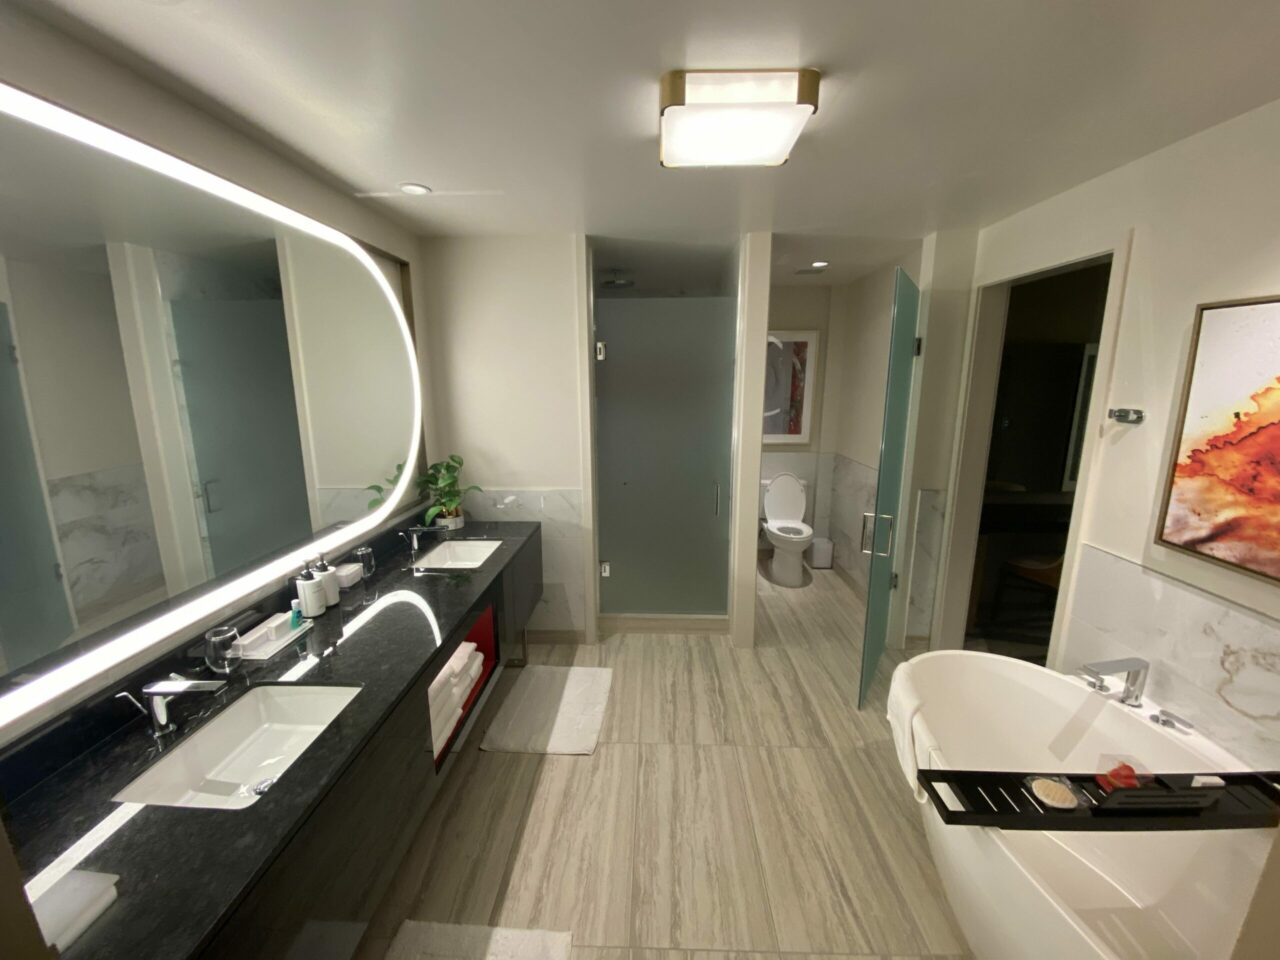 Conrad & Hilton hotels Las Vegas bathroom review 